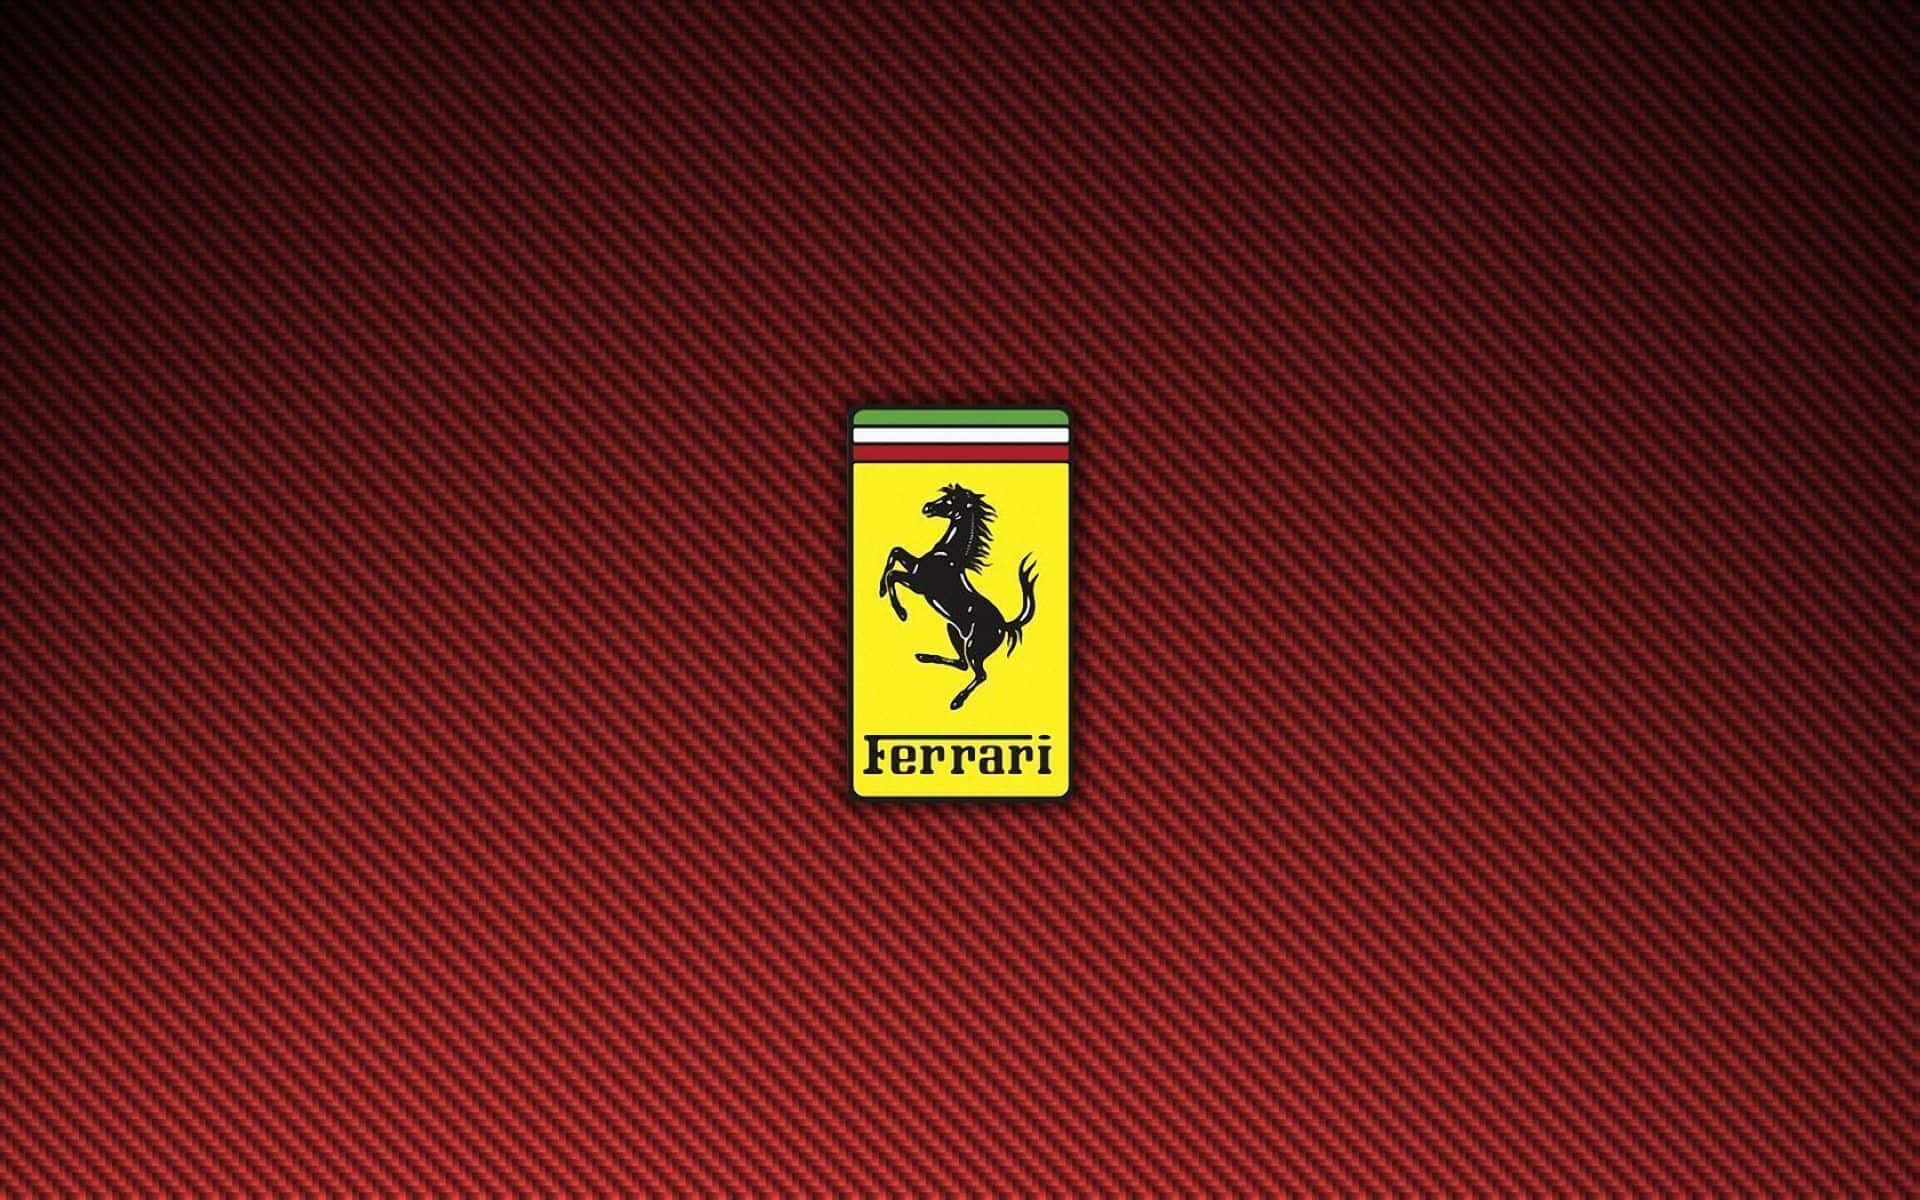 Ferrari Logo Wallpapers Hd Wallpapers Ferrari Logo Wallpapers Ferrari Logo Wallpapers Ferrari Logo Wallpapers Ferrari Logo Wallpapers Ferrari